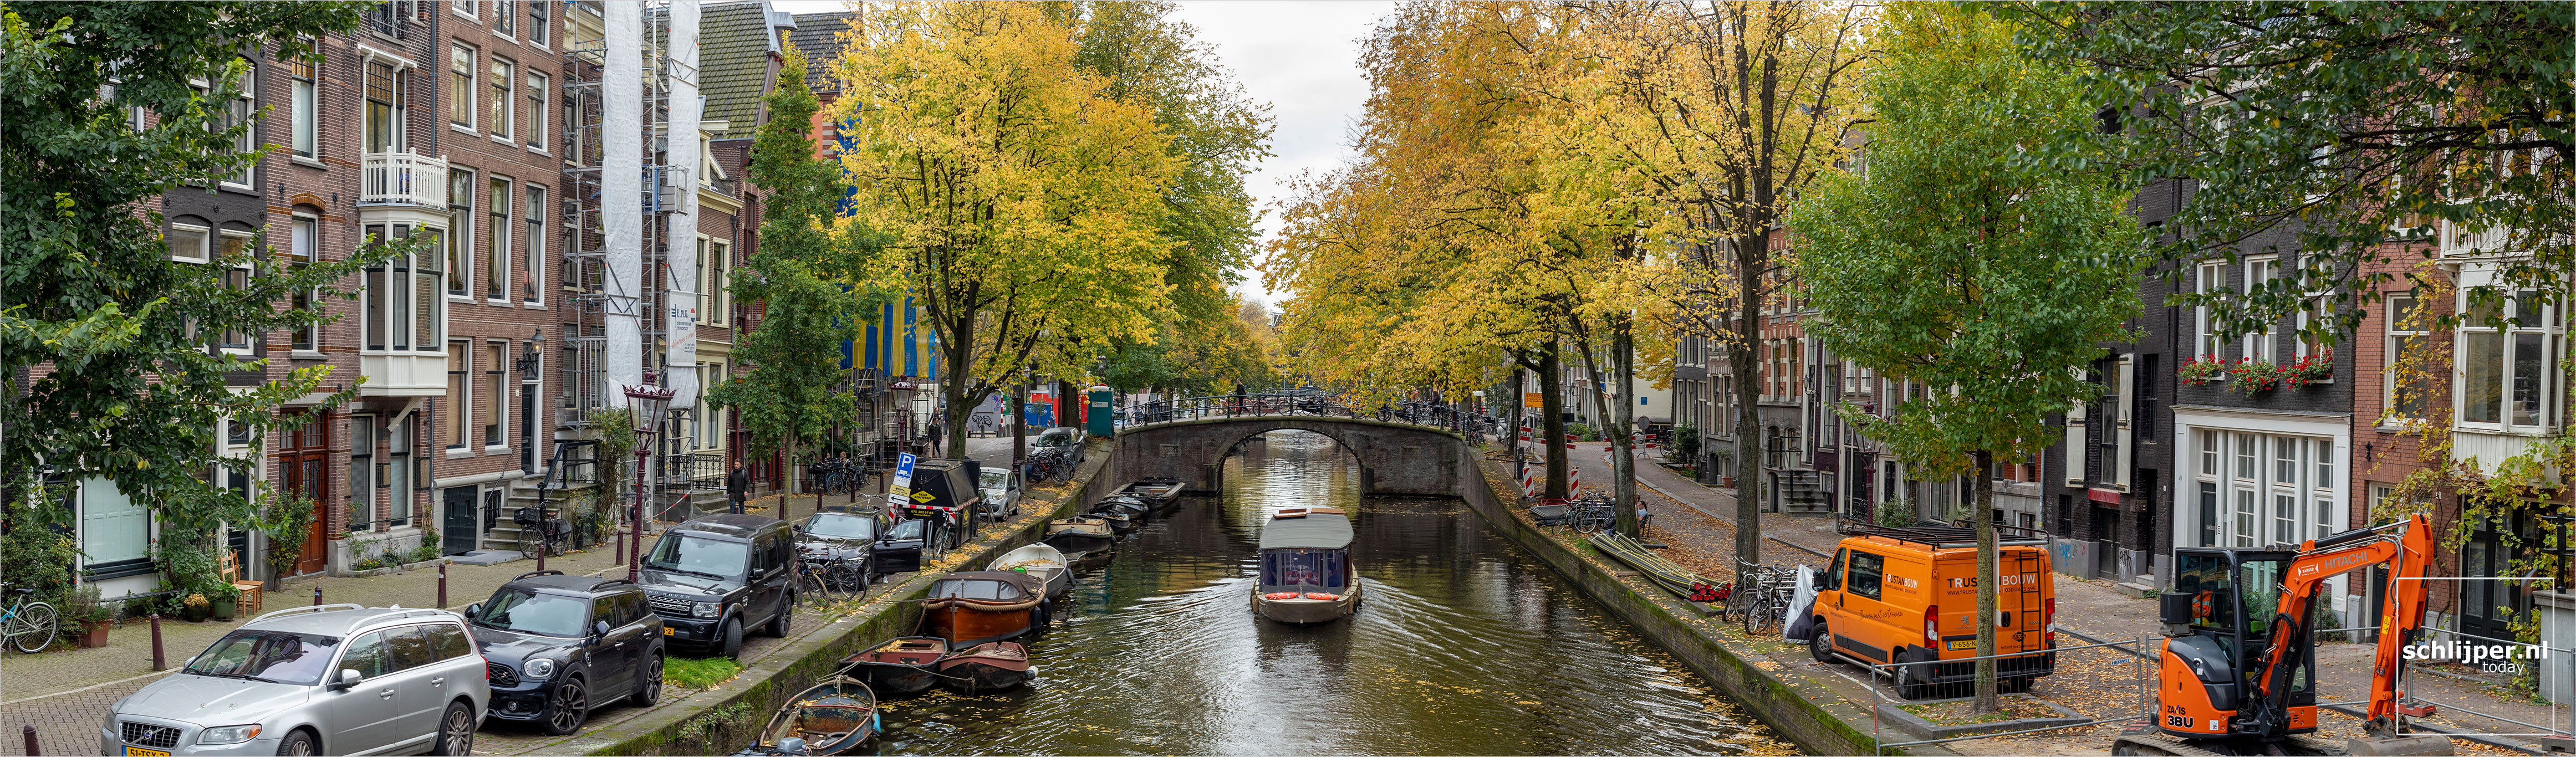 Nederland, Amsterdam, 24 oktober 2020